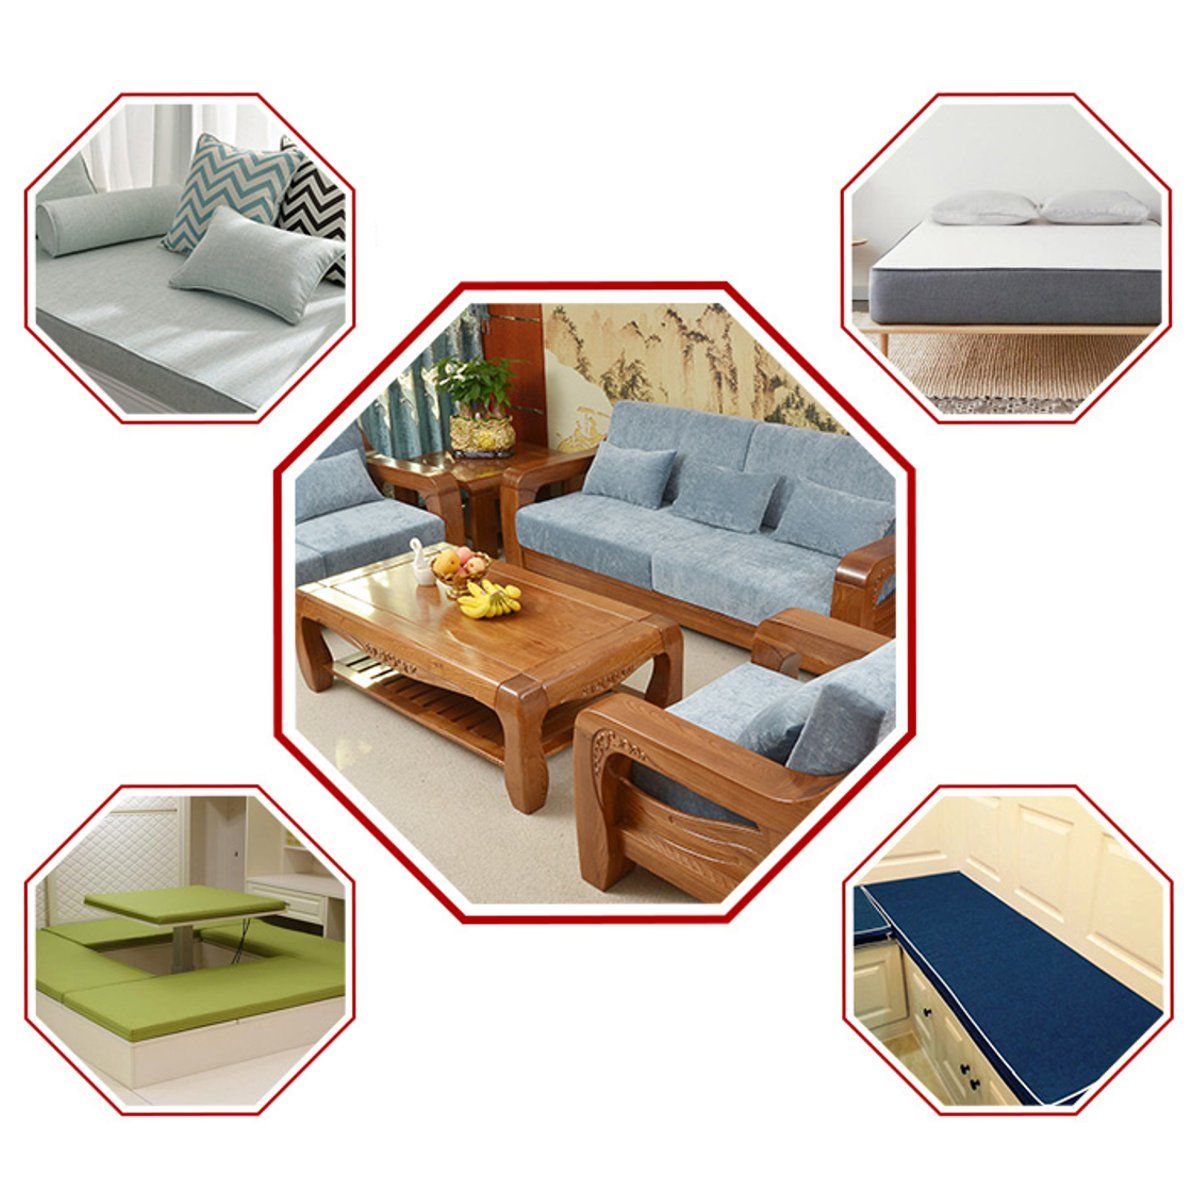 55x55cm-High-Density-Upholstery-Cushion-Foam-Chair-Sofa-Seat-Foam-Pad-Sheet-1264131